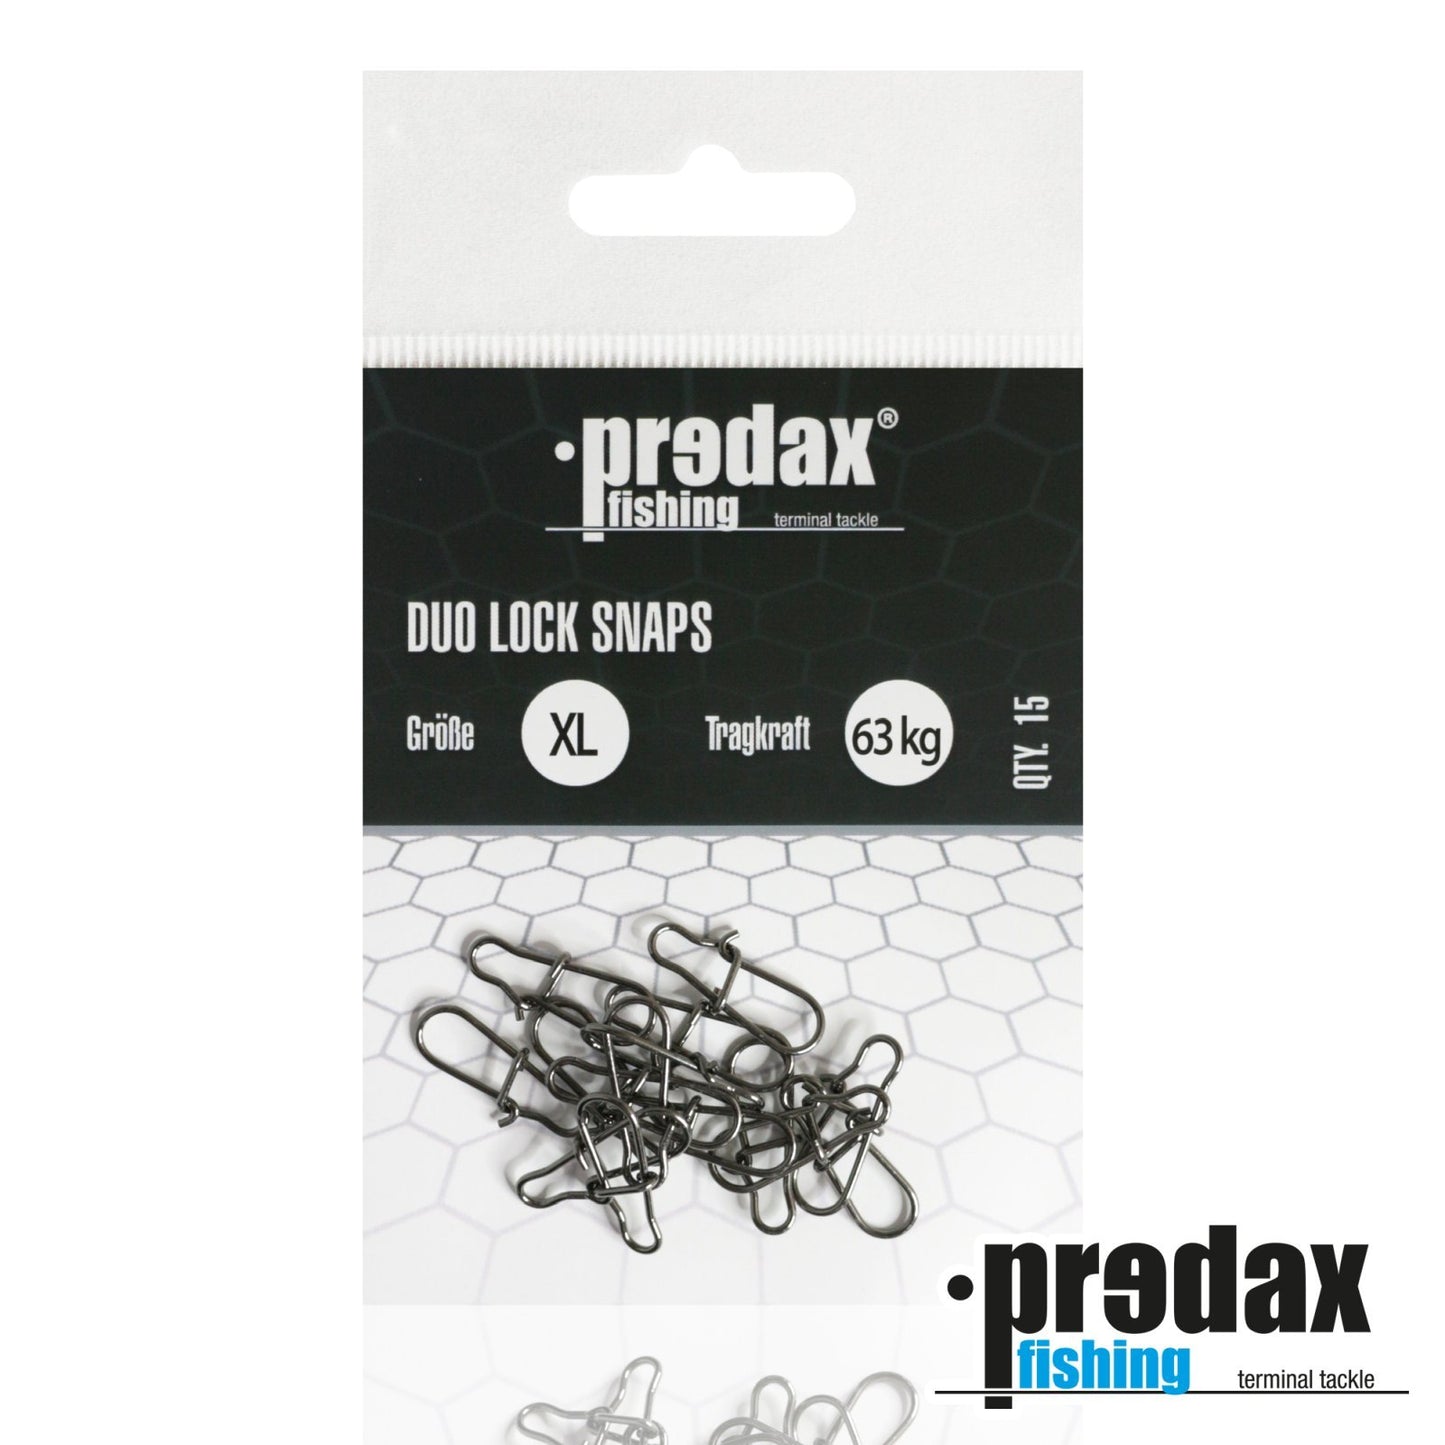 Predax Duo Lock Snaps XL